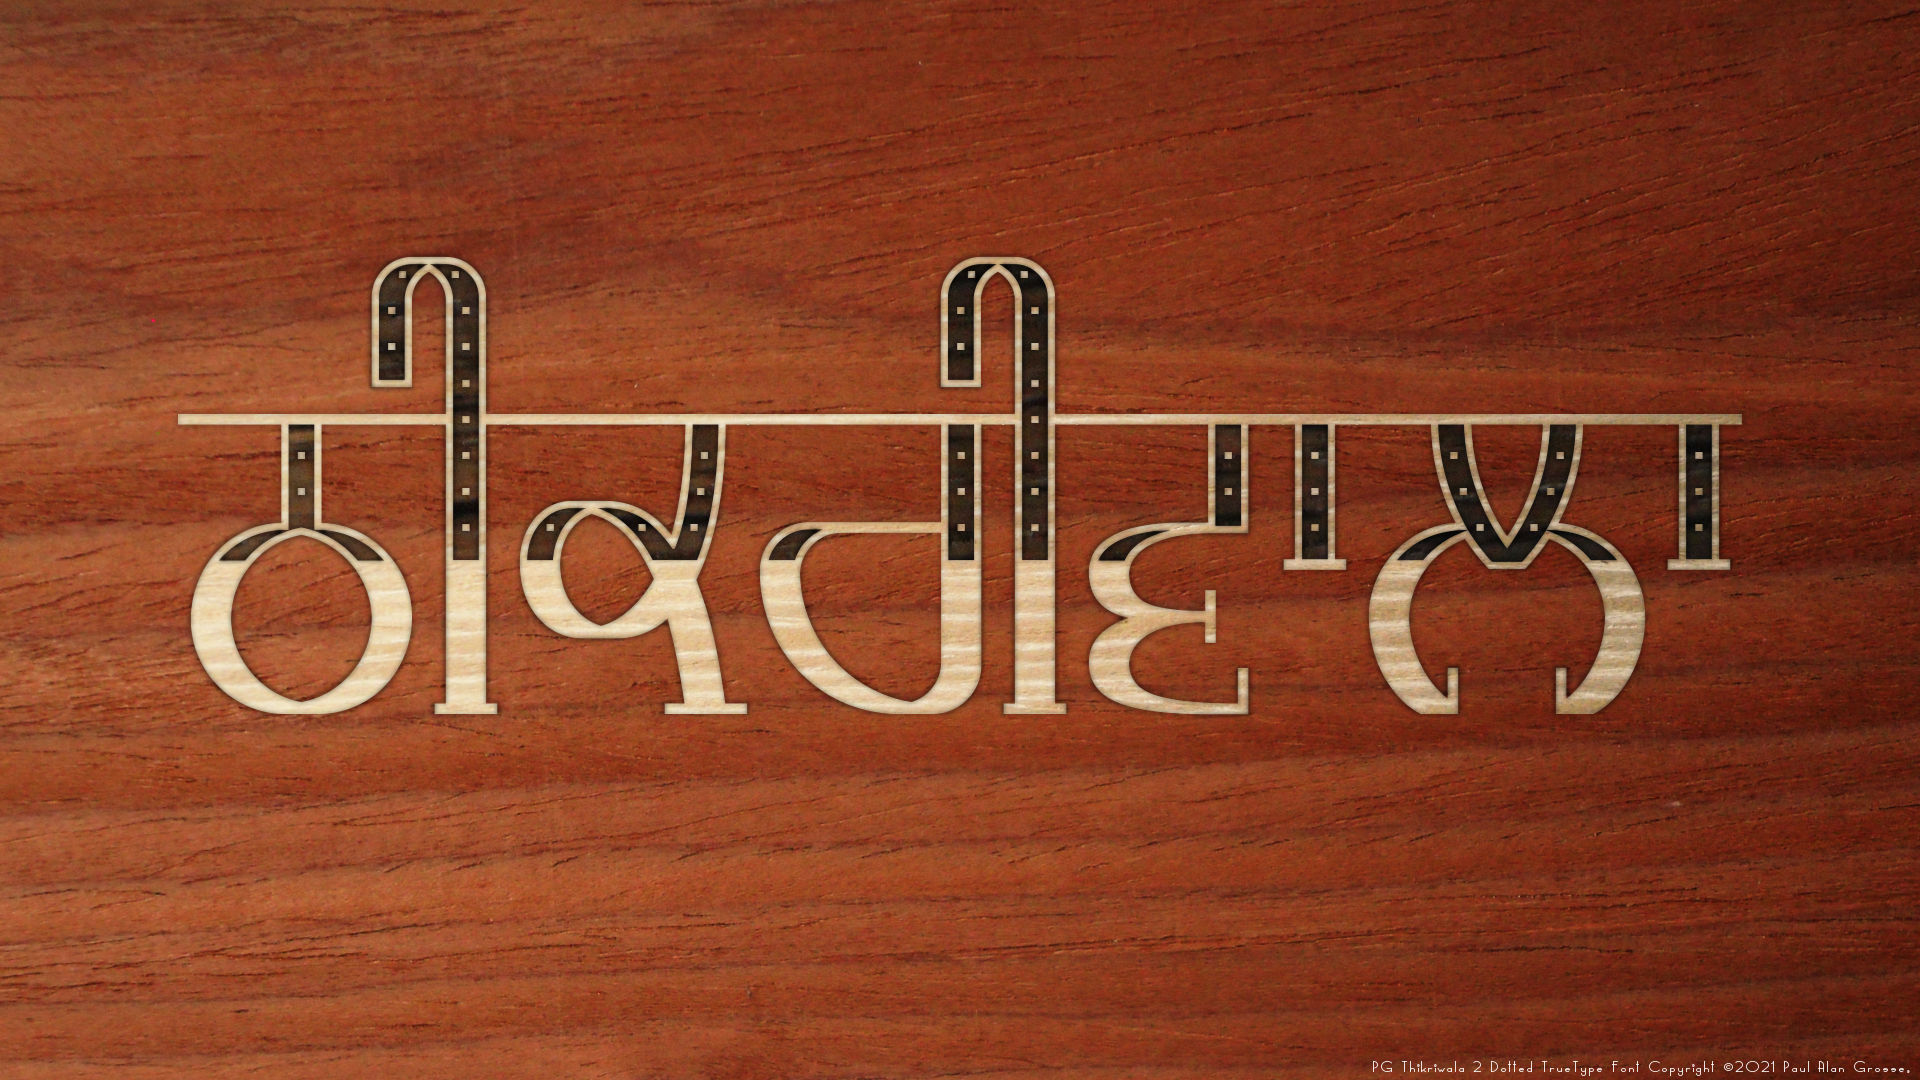 stylish gurmukhi fonts